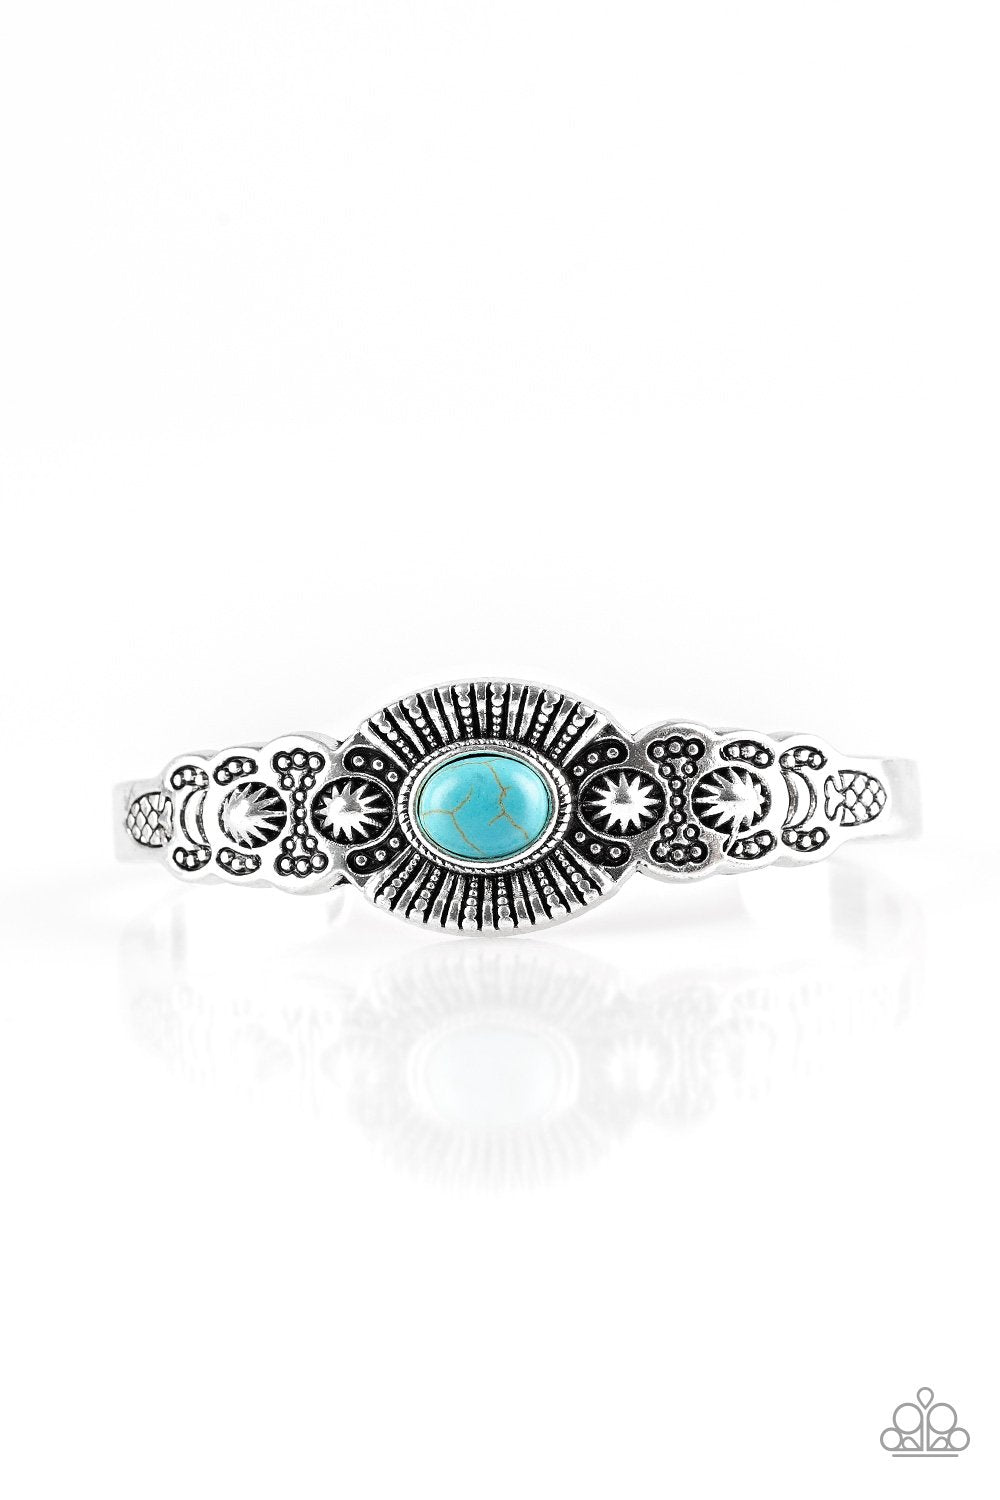 Upcycled Damier Azur Cuff Bracelet - $42 - From Marissa